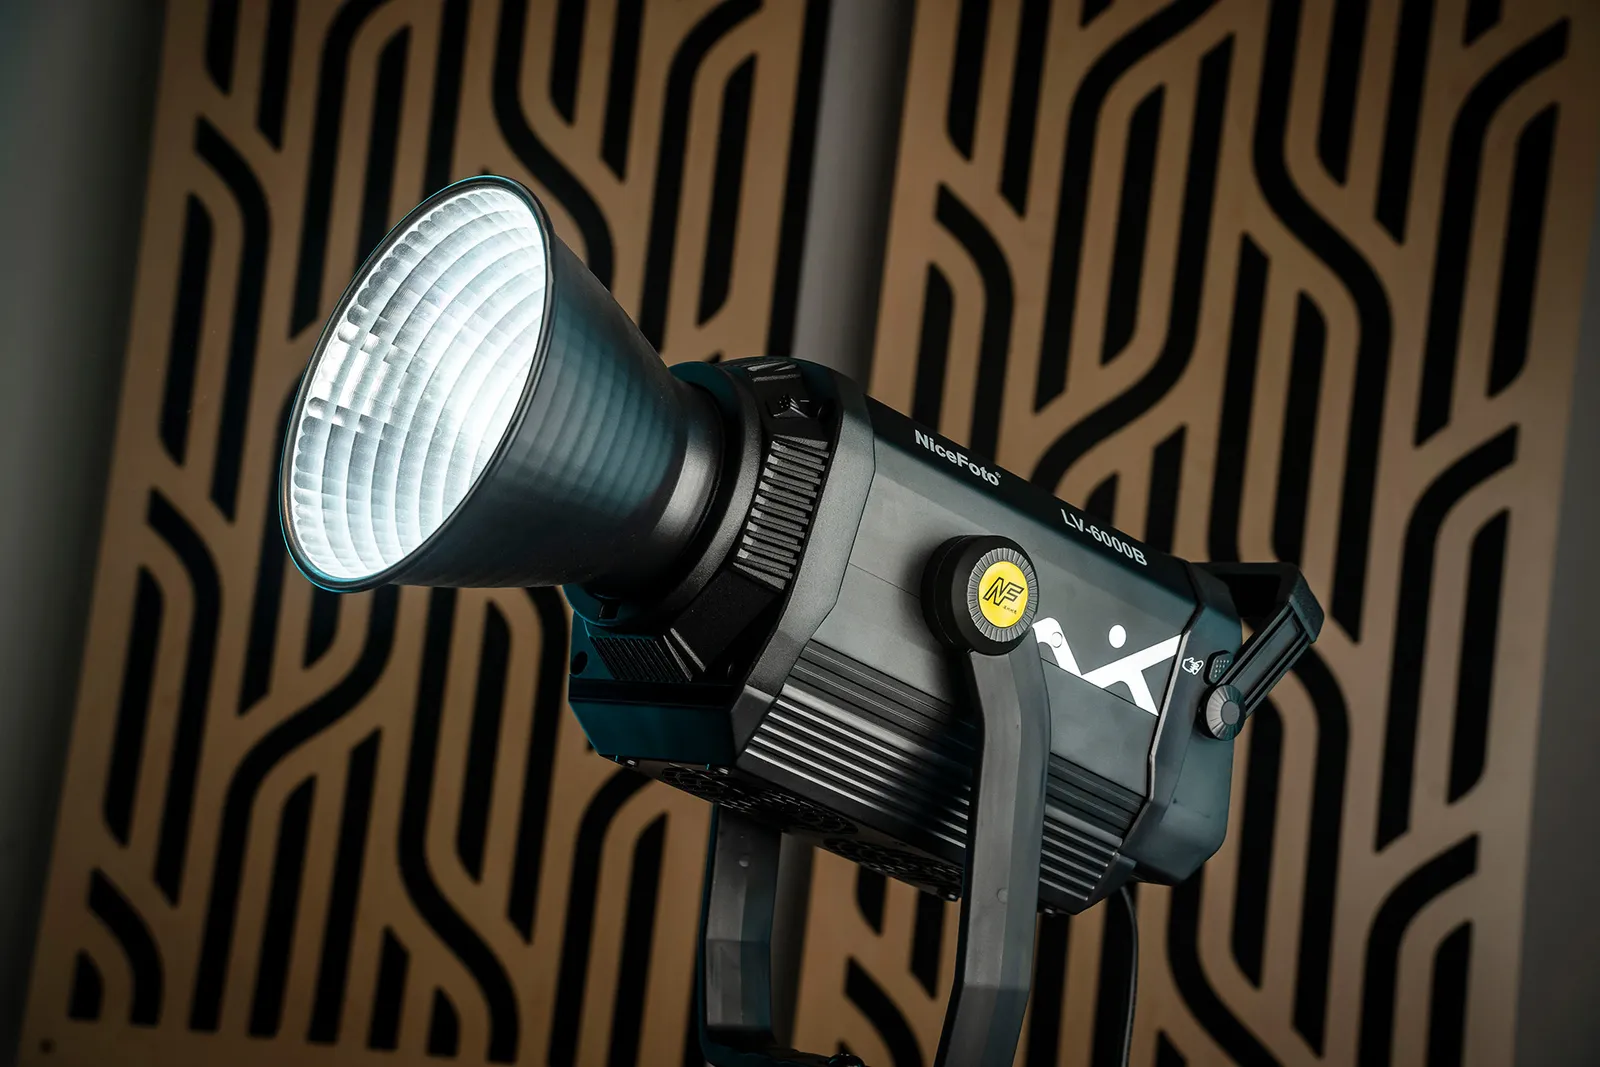 NiceFoto LV-6000B 600W Daylight 5600K Continuous LED Video Light